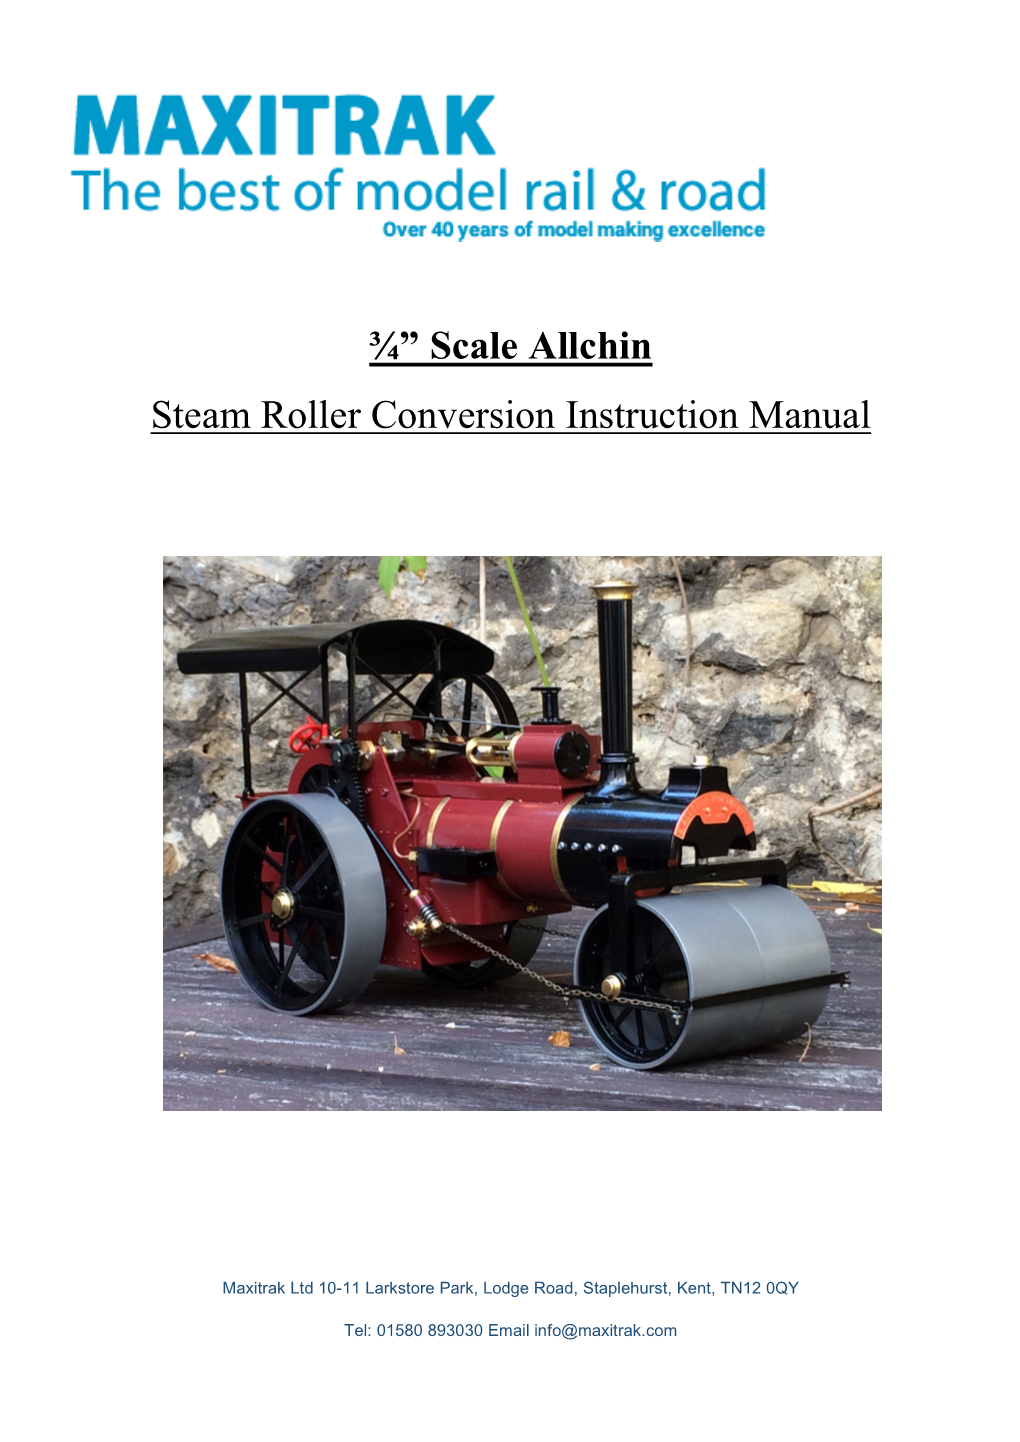 ¾” Scale Allchin Steam Roller Conversion Instruction Manual